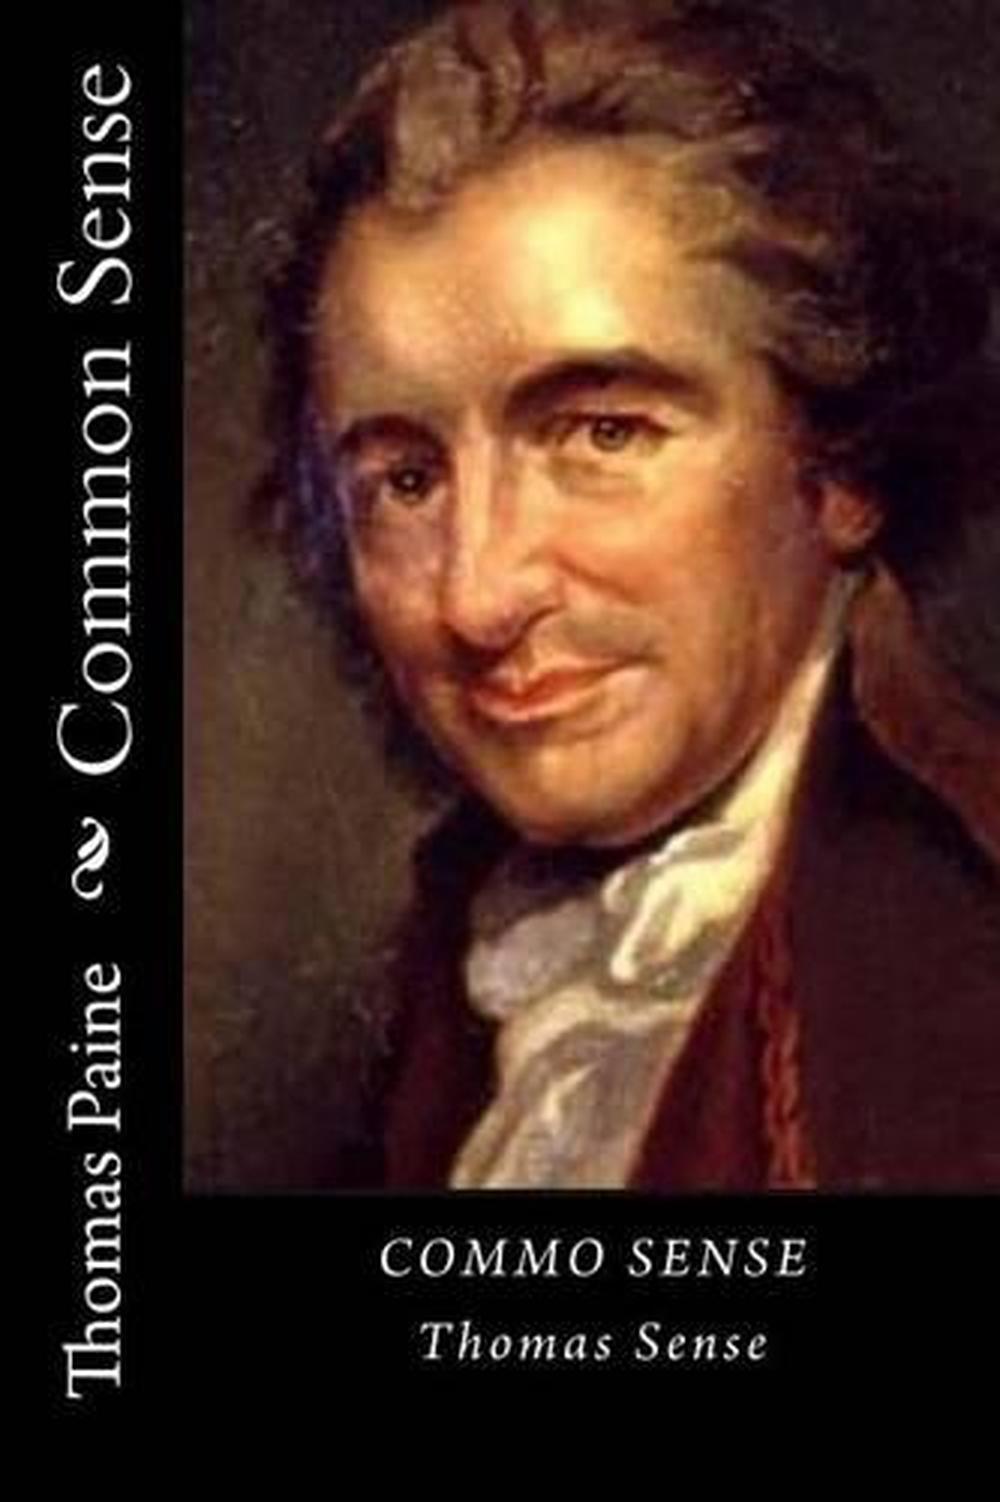 Common Sense By Thomas Paine English Paperback Book Free Shipping